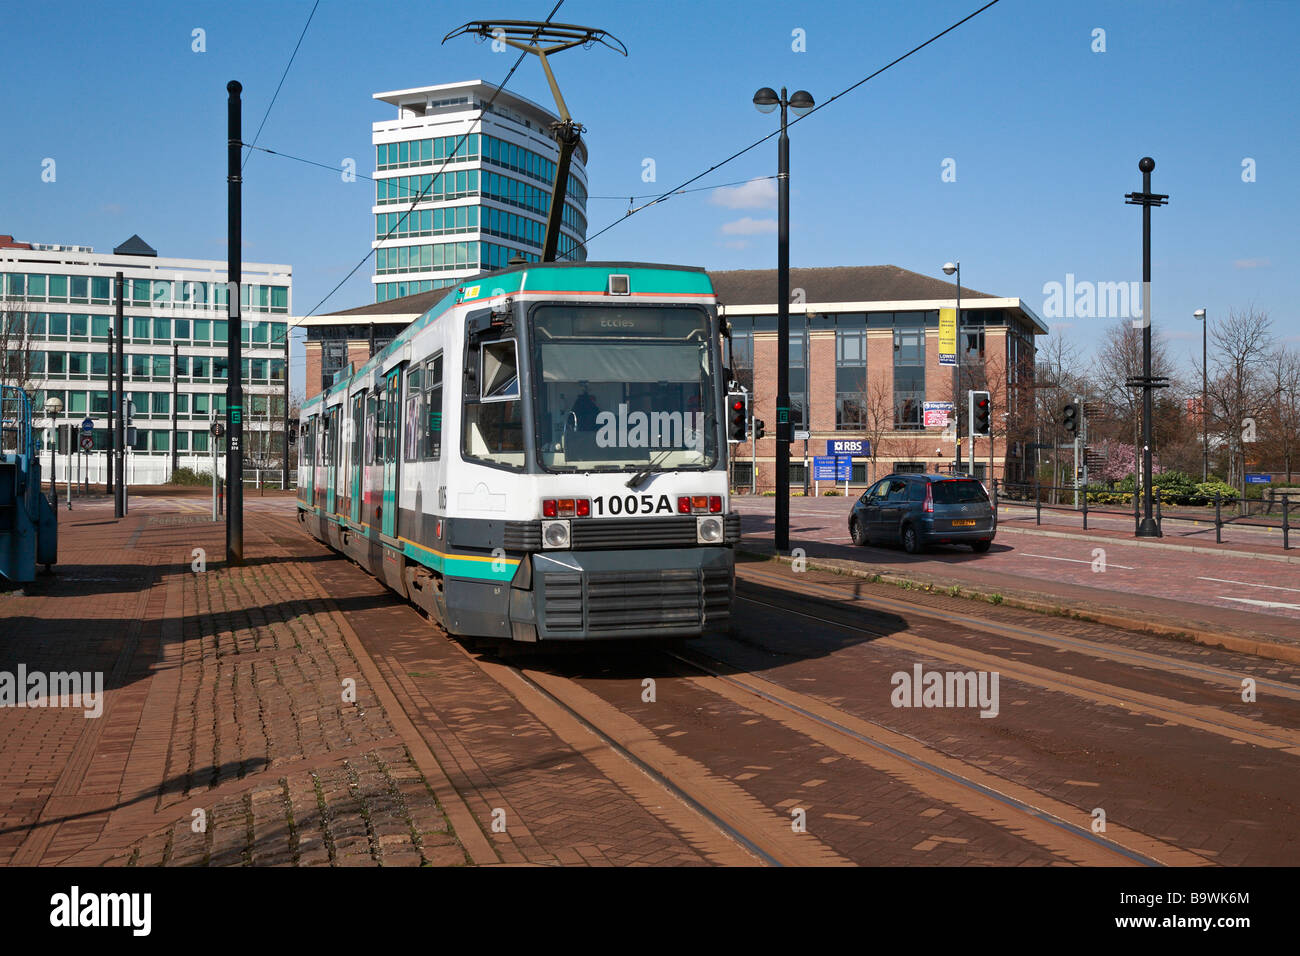 Laissant tramway Salford Quays, Manchester, Lancashire, England, UK. Banque D'Images